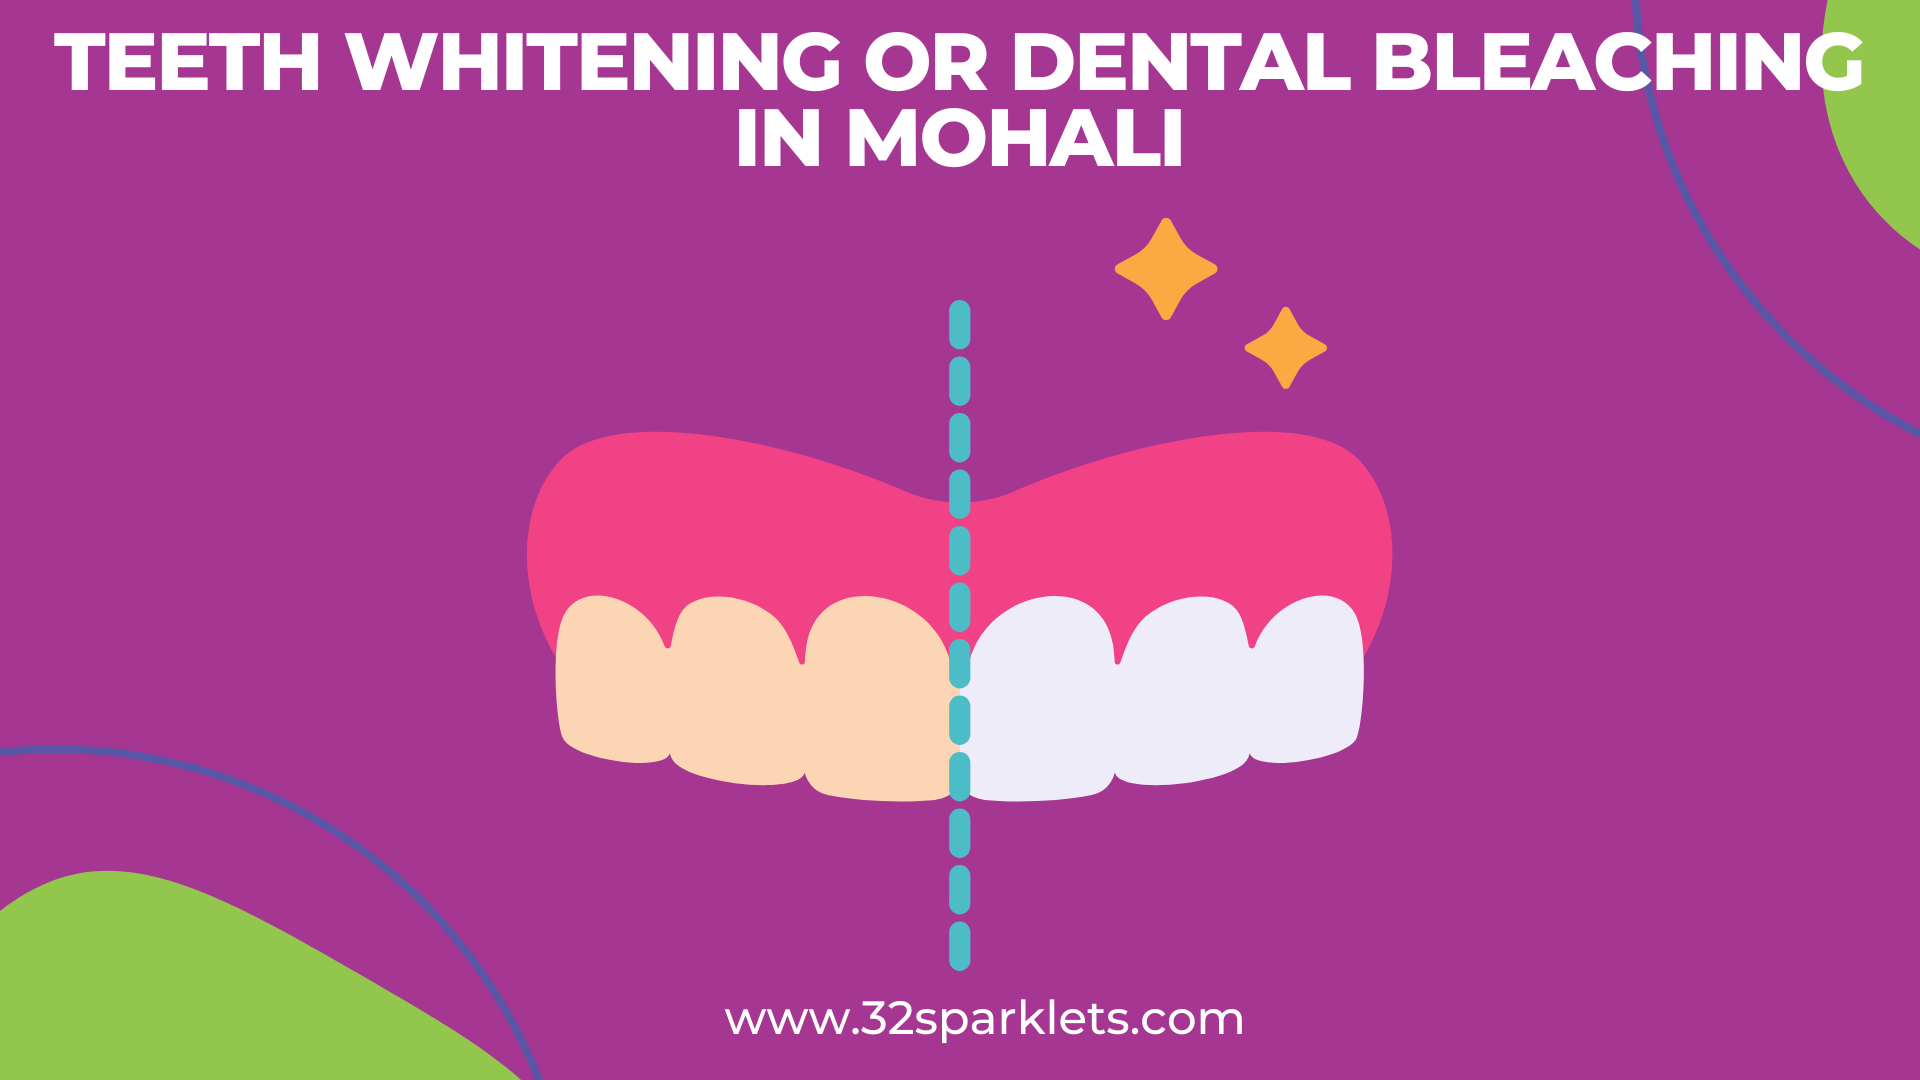 dental bleaching or teeth whitening in Mohali, cost of dental bleaching, bleaching price